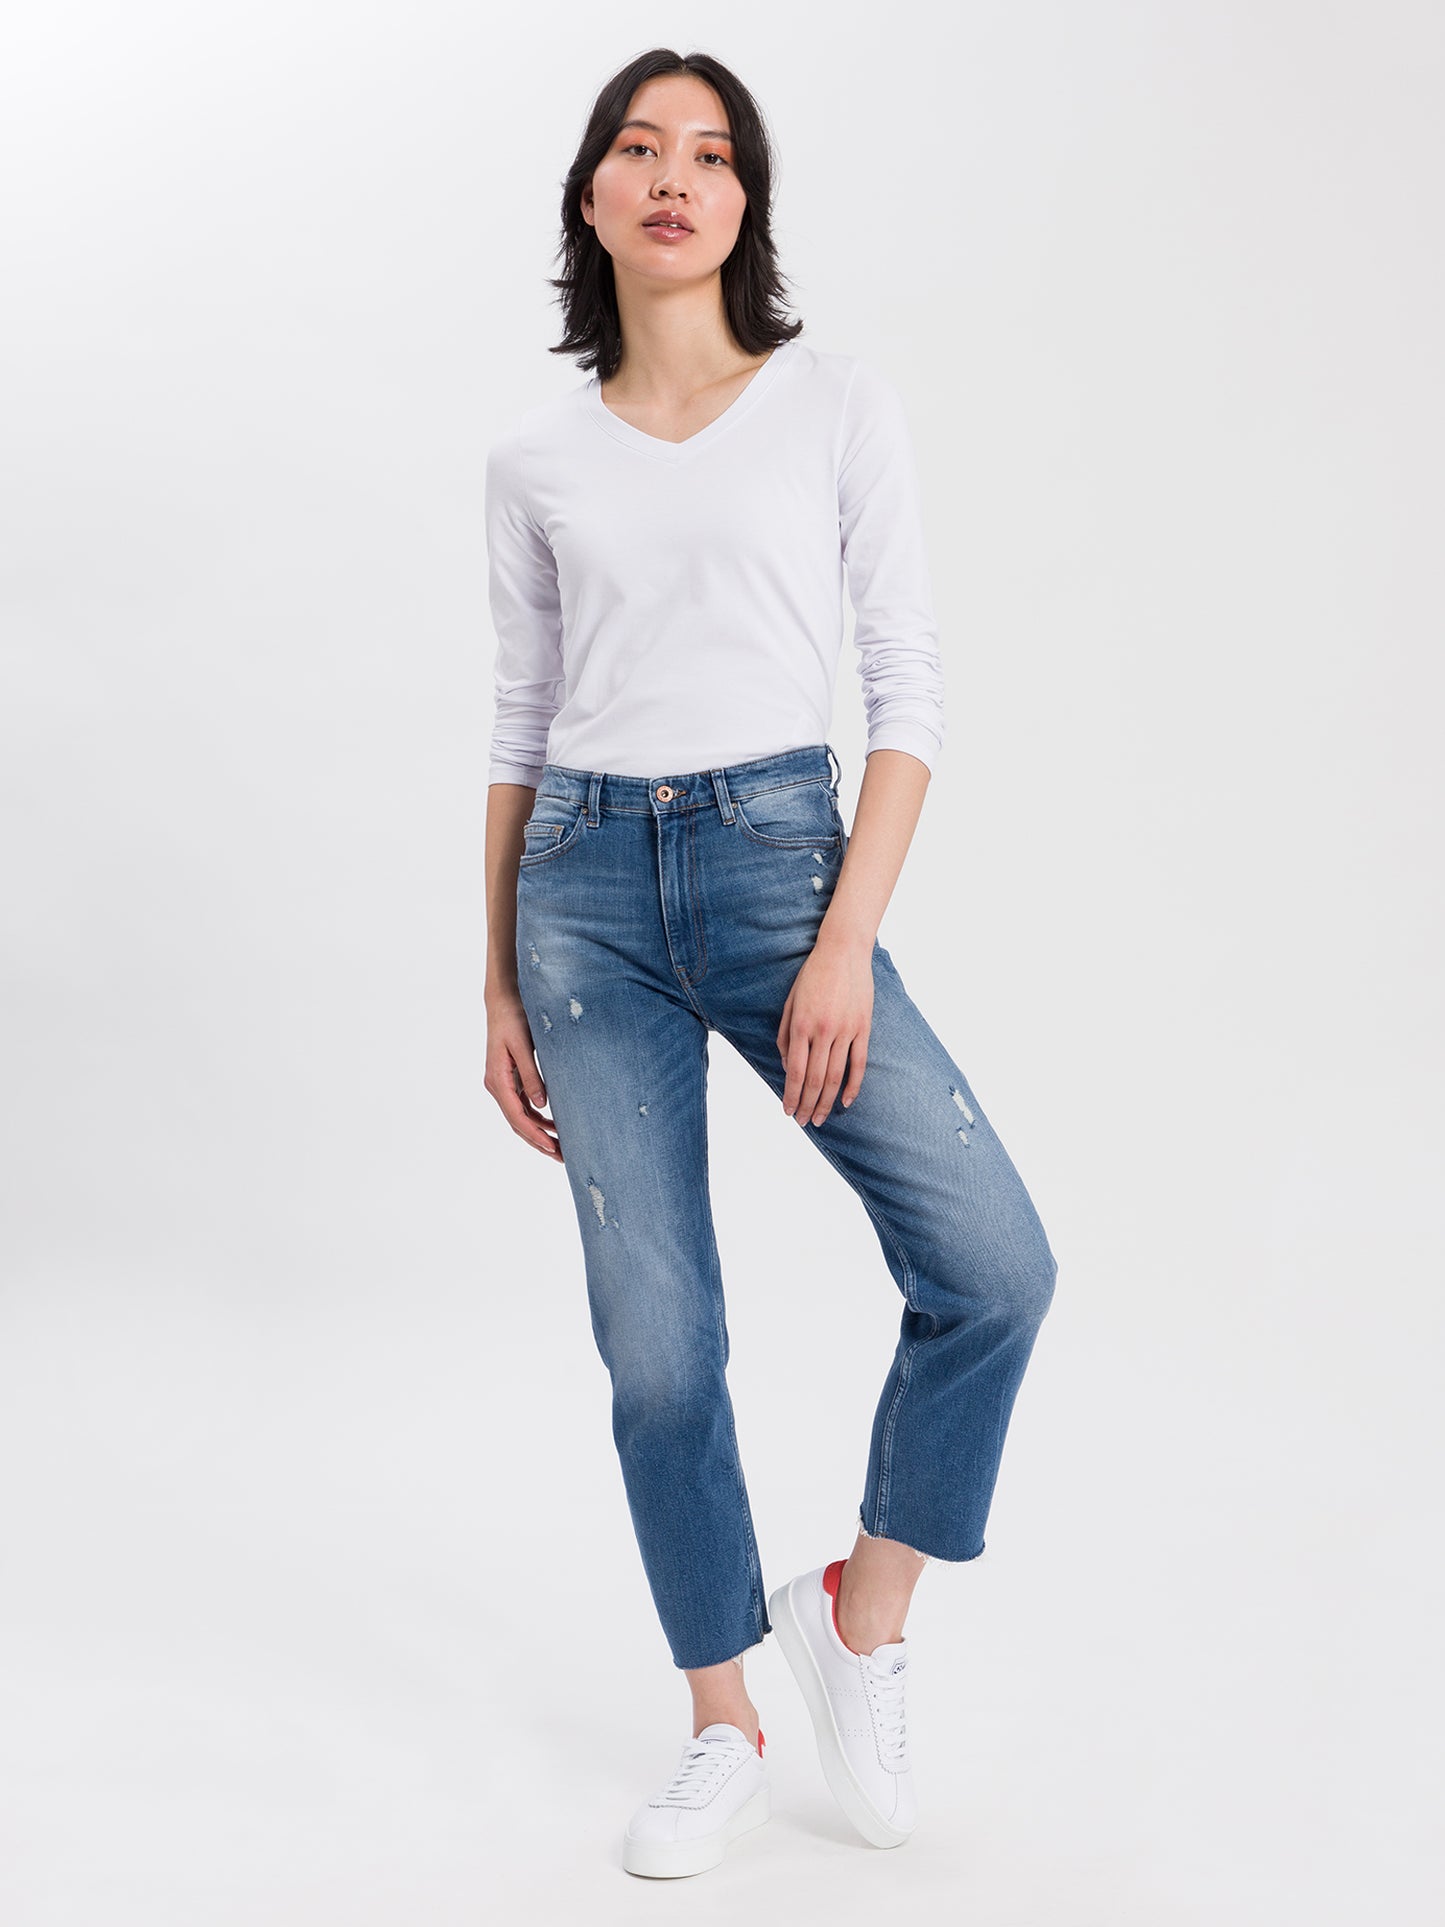 Marisa Damen Jeans Regular Fit High Waist Straight Leg mittelblau